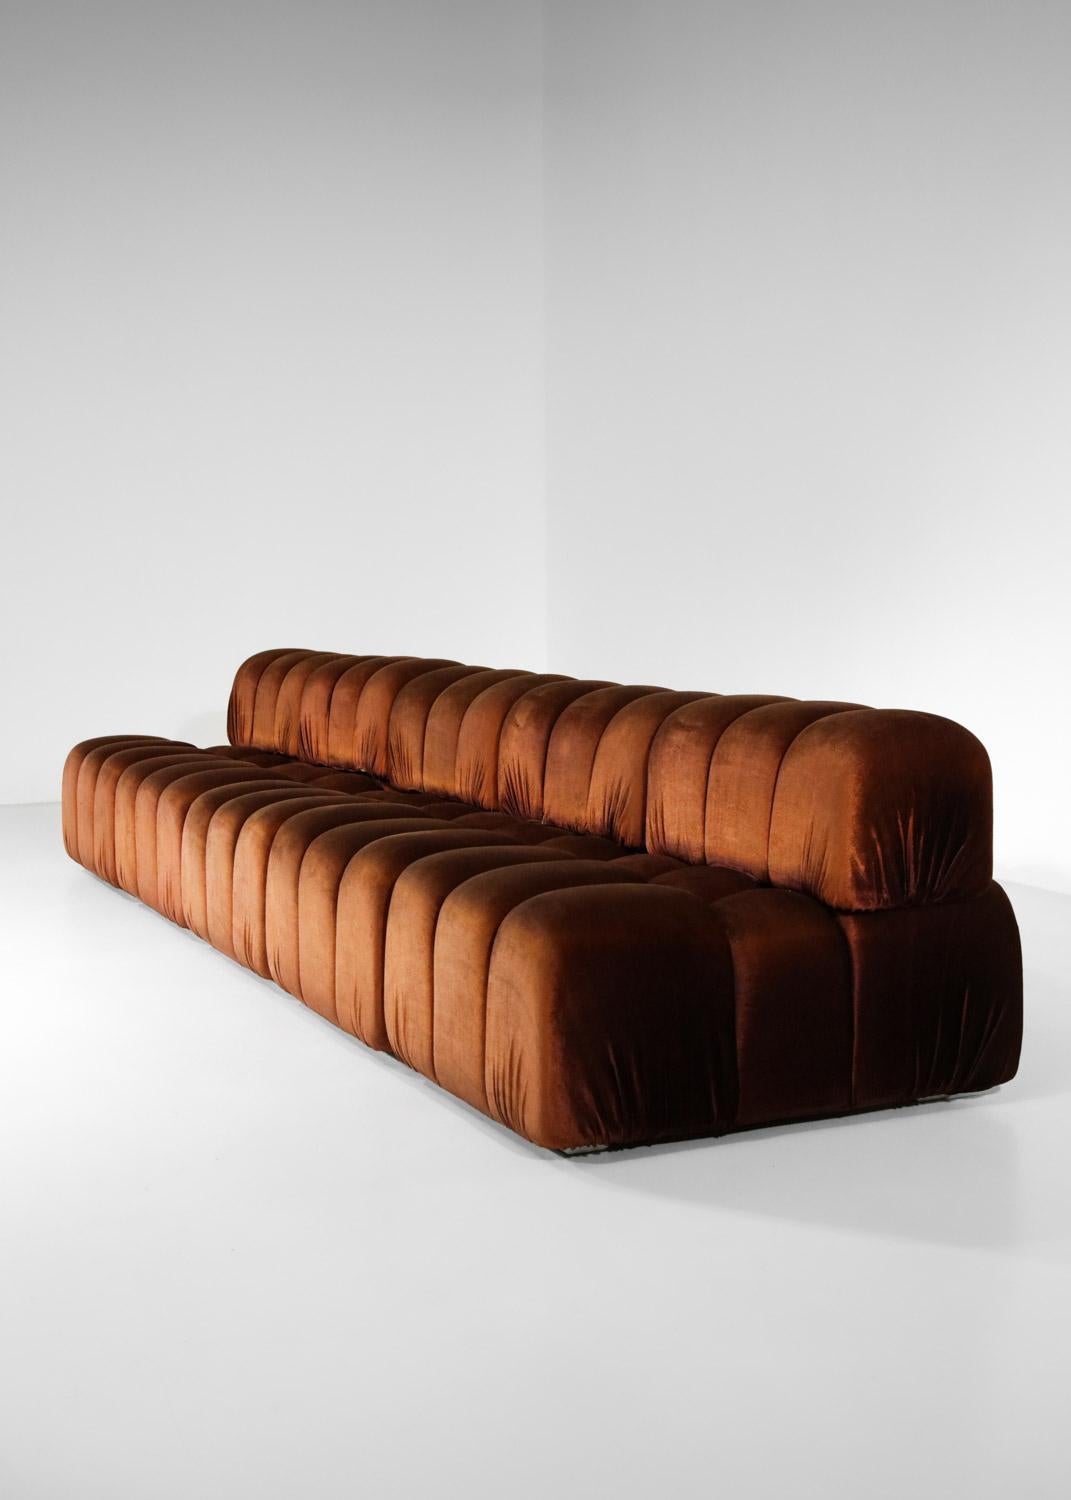 Late 20th Century Italian sofa 5 modules 70s in style of Mario Bellini heater midcentury design